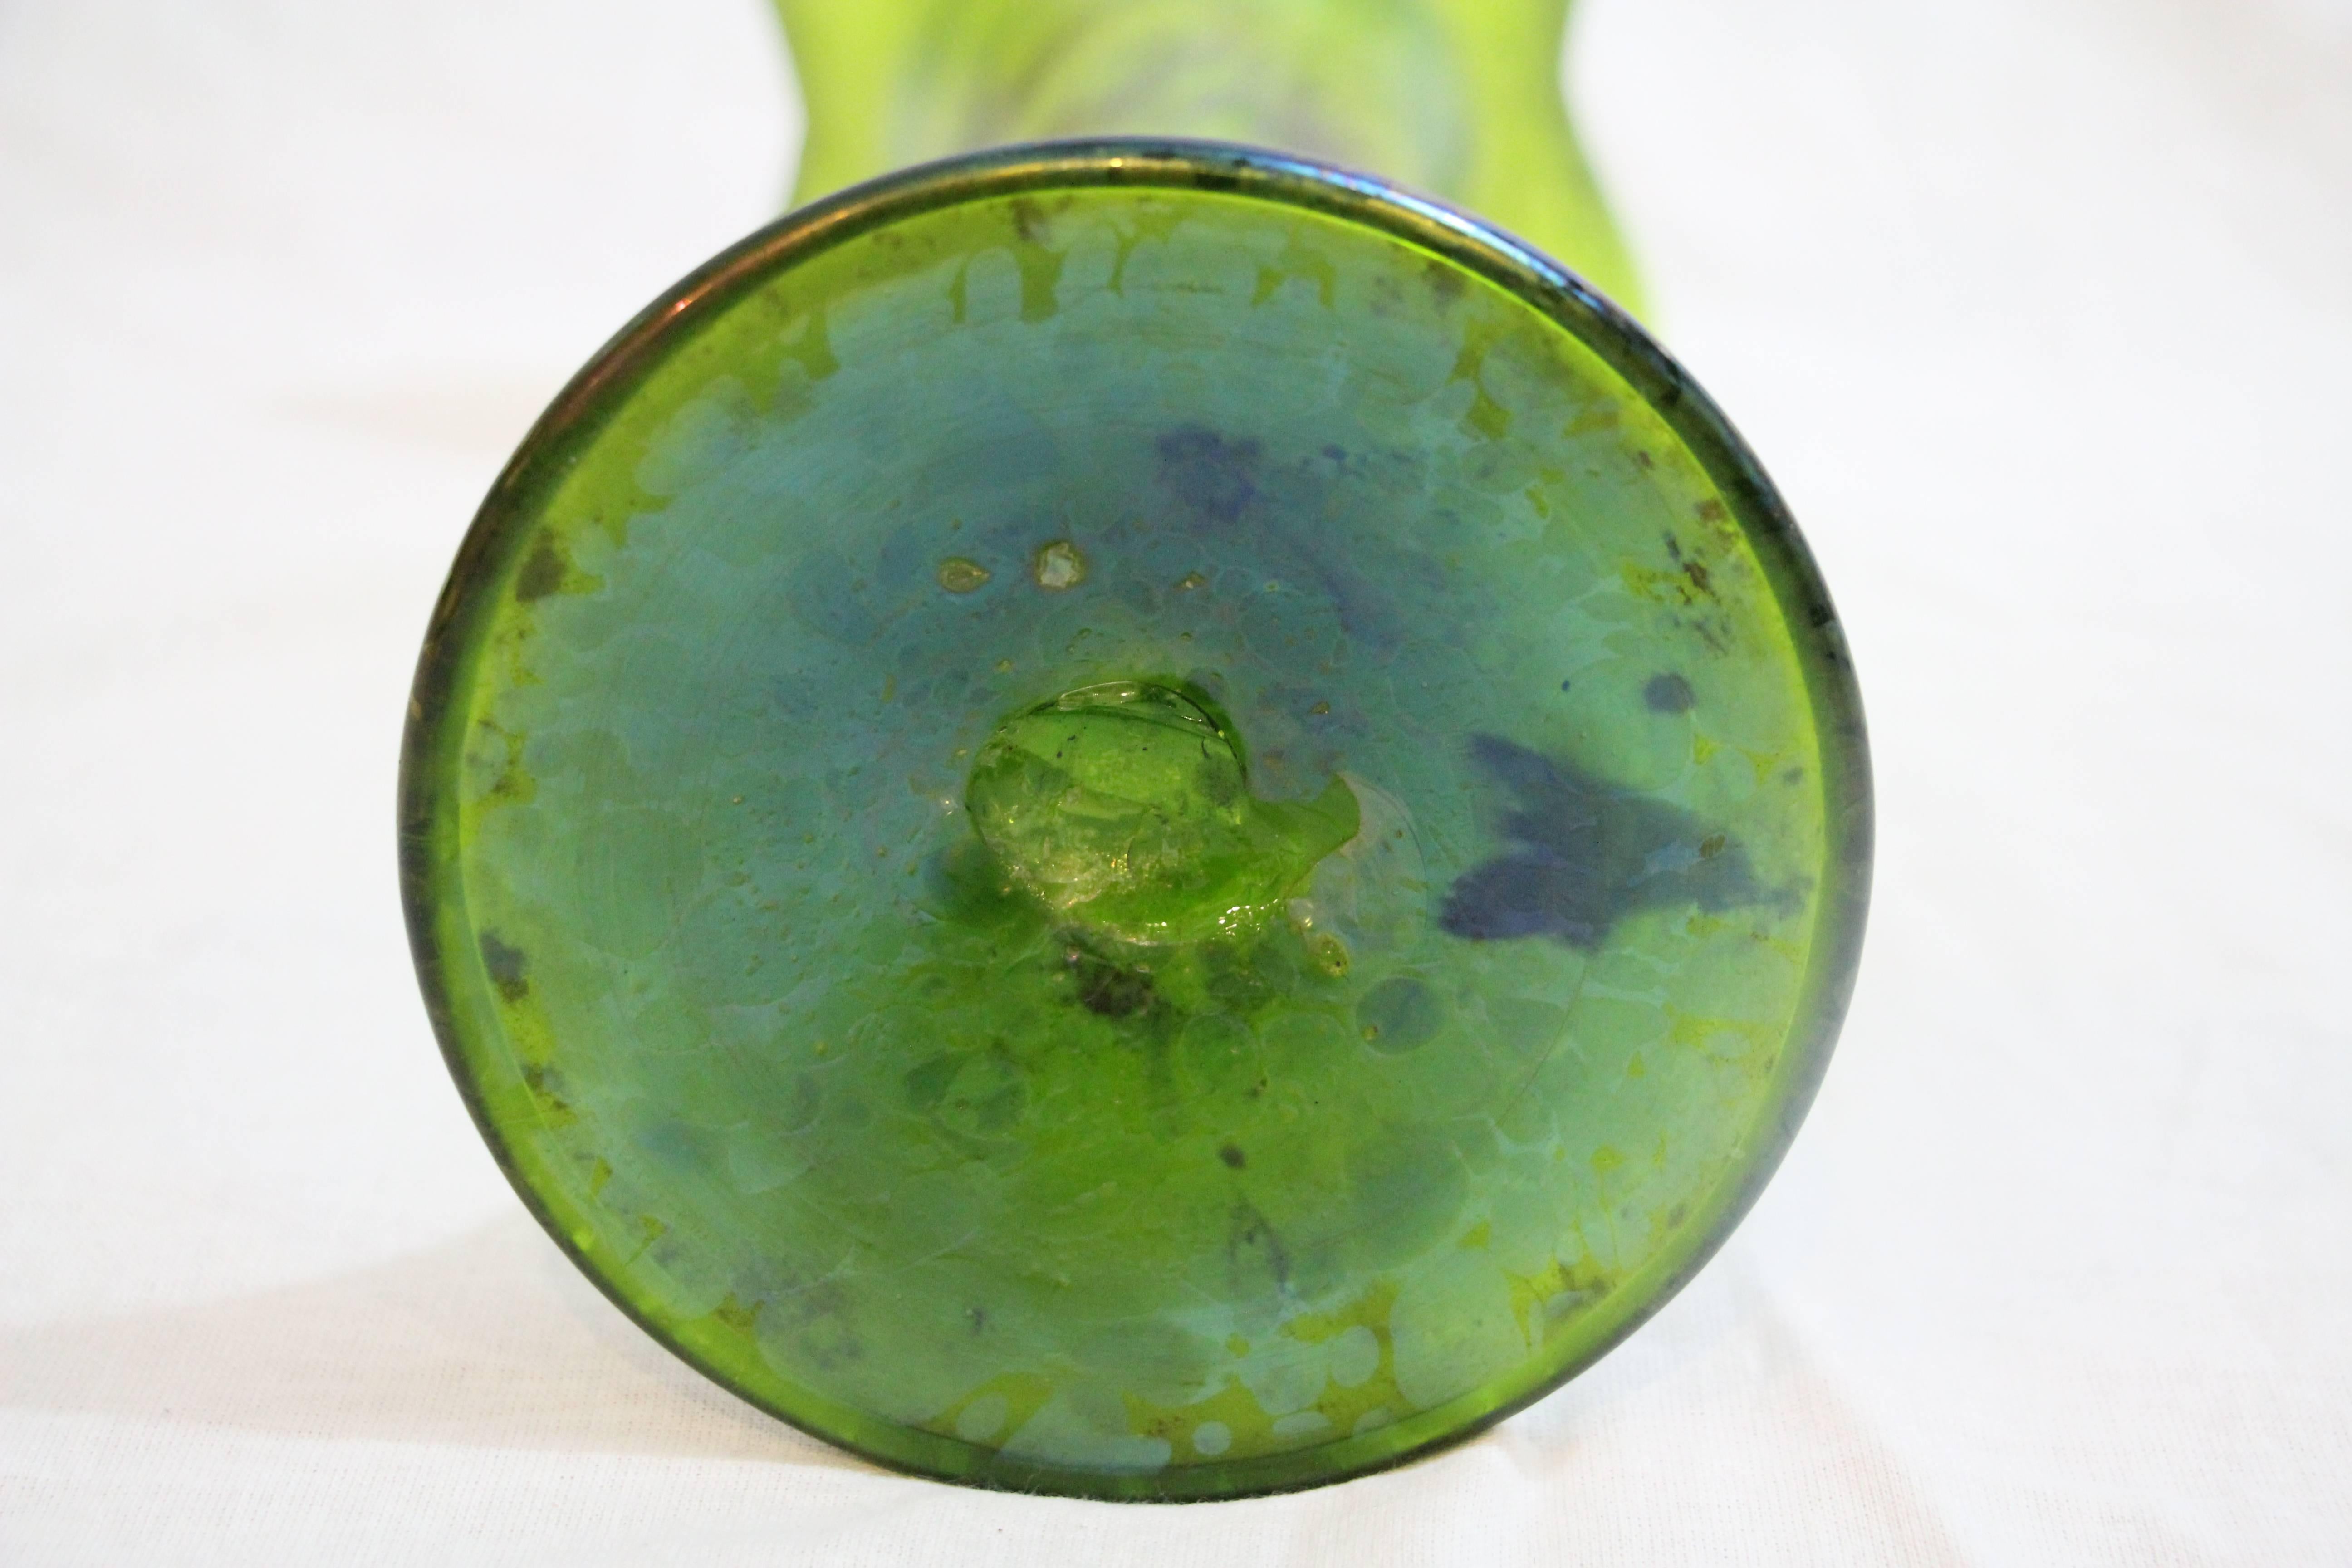 Art Nouveau glass vase, probably European, circa 1920. Green iridescent handblown glass. In the style of Loetz Austria.